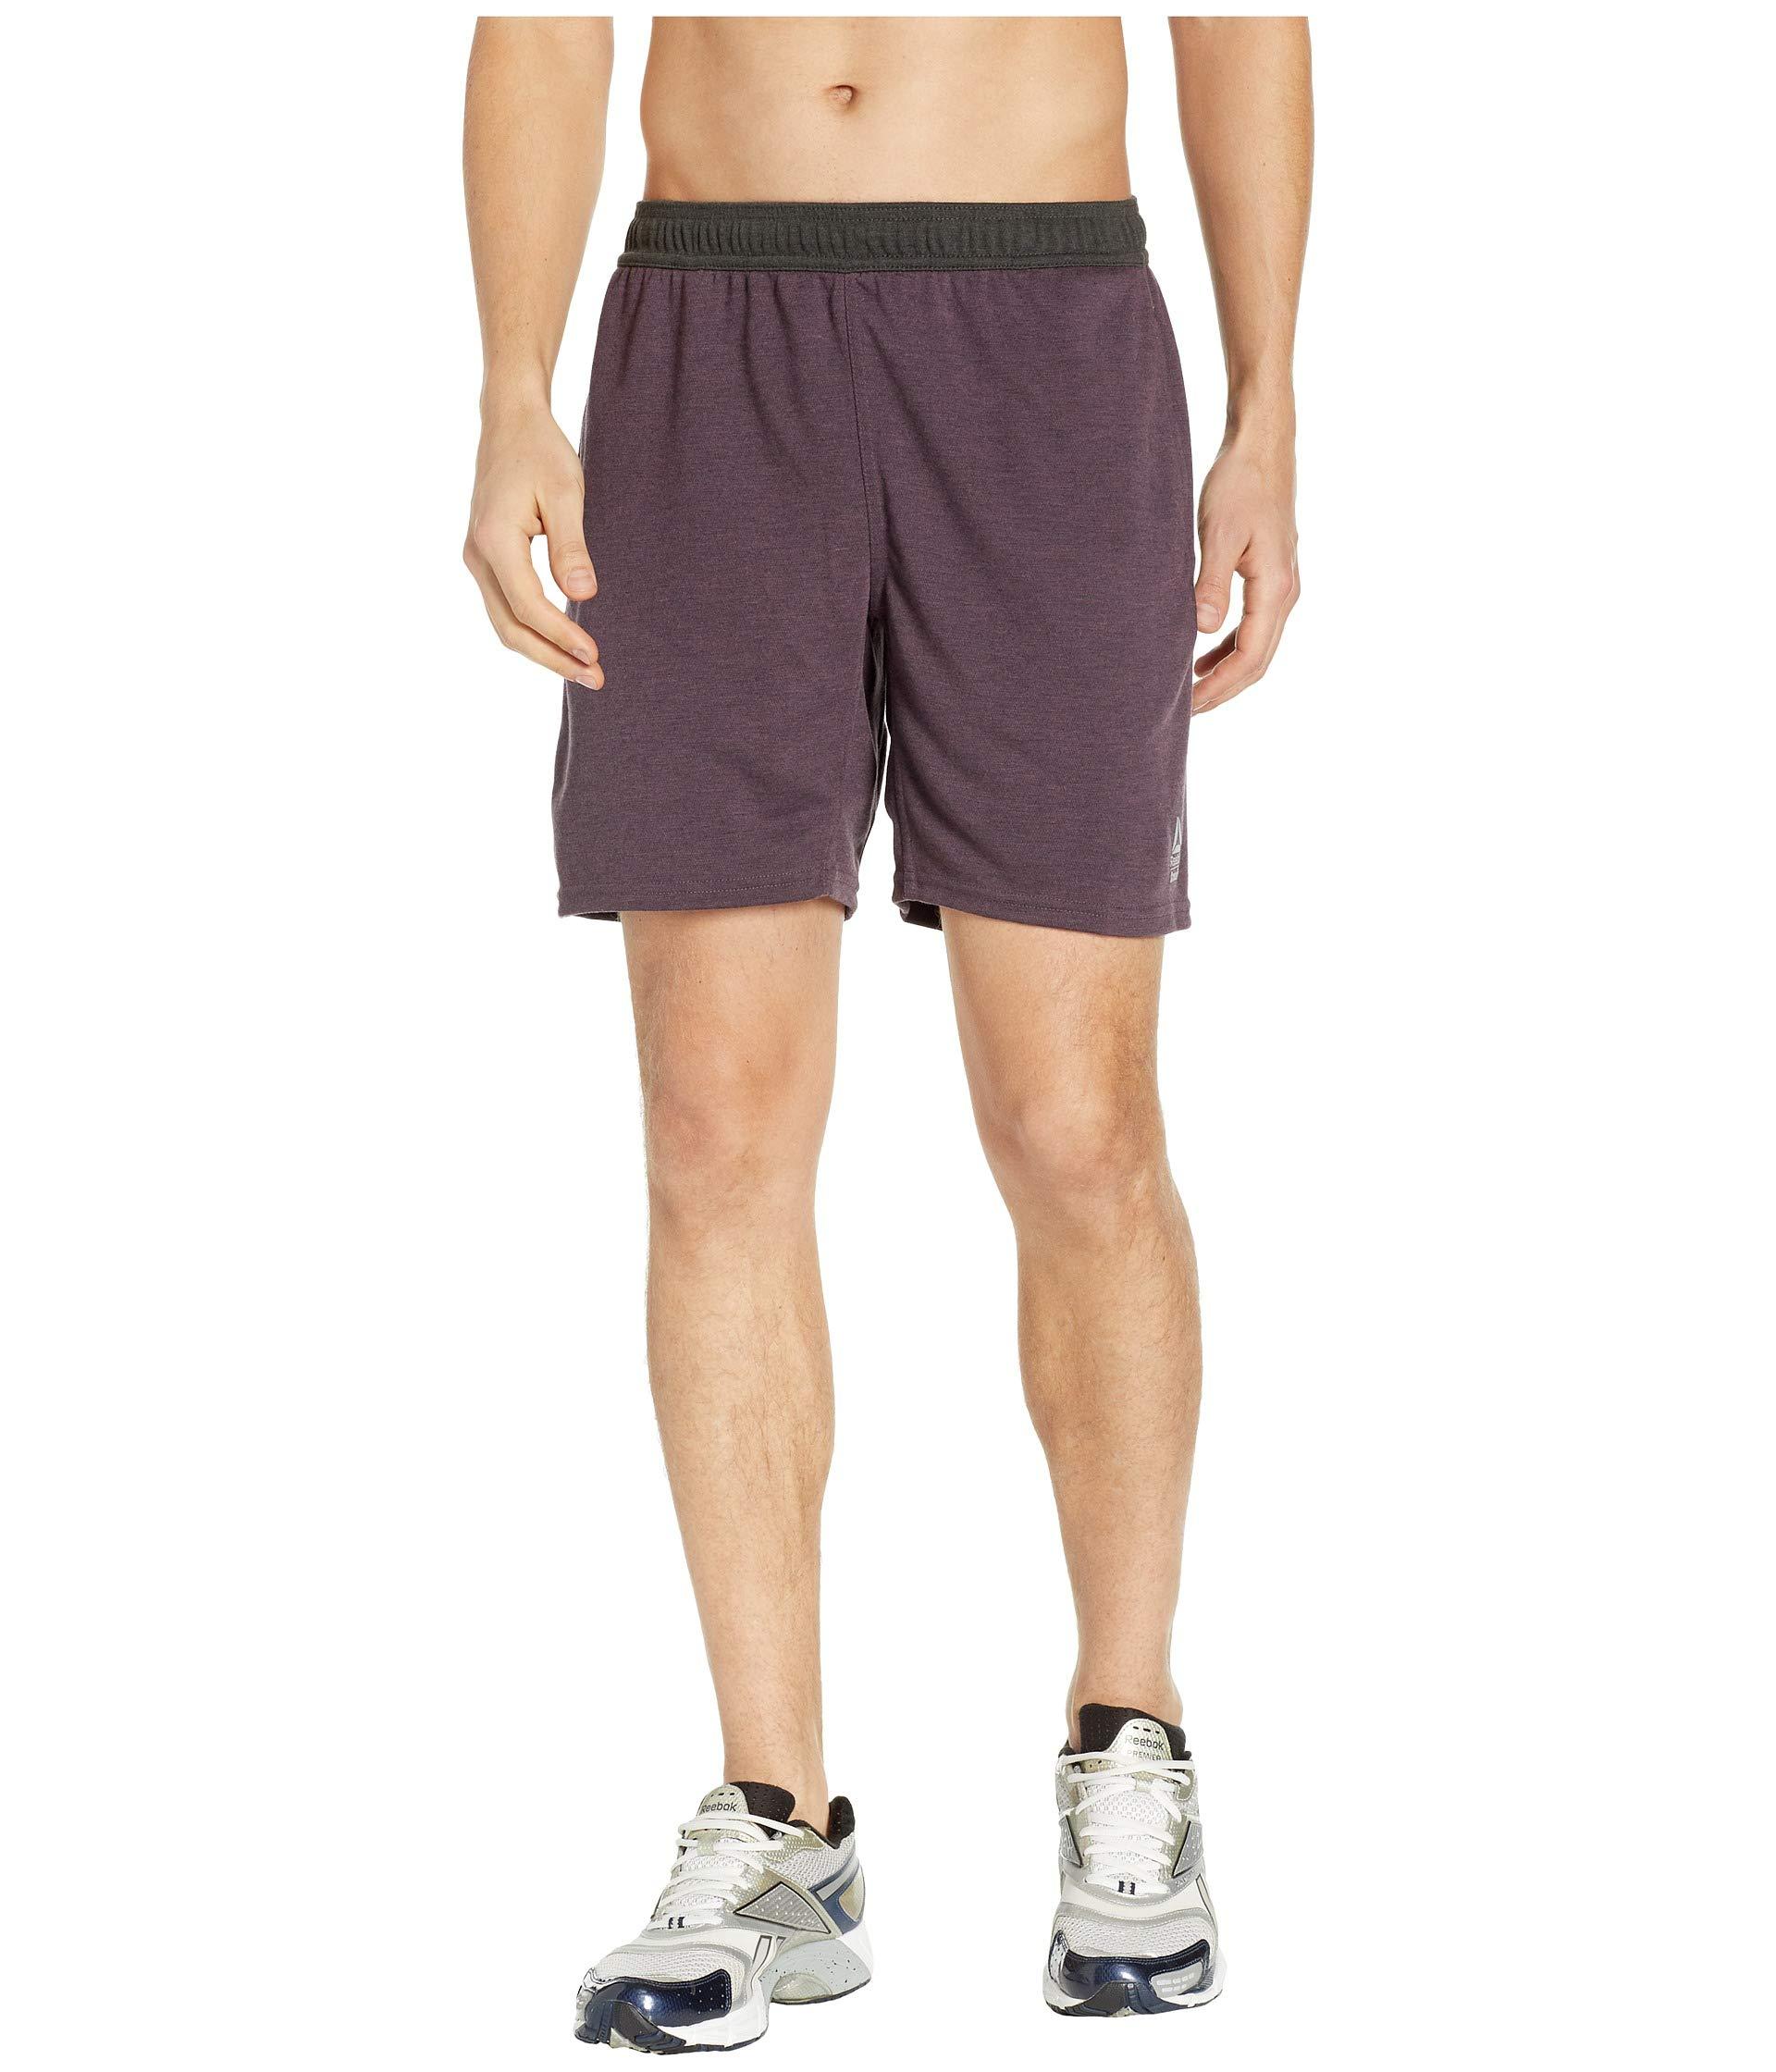 reebok shorts mens purple